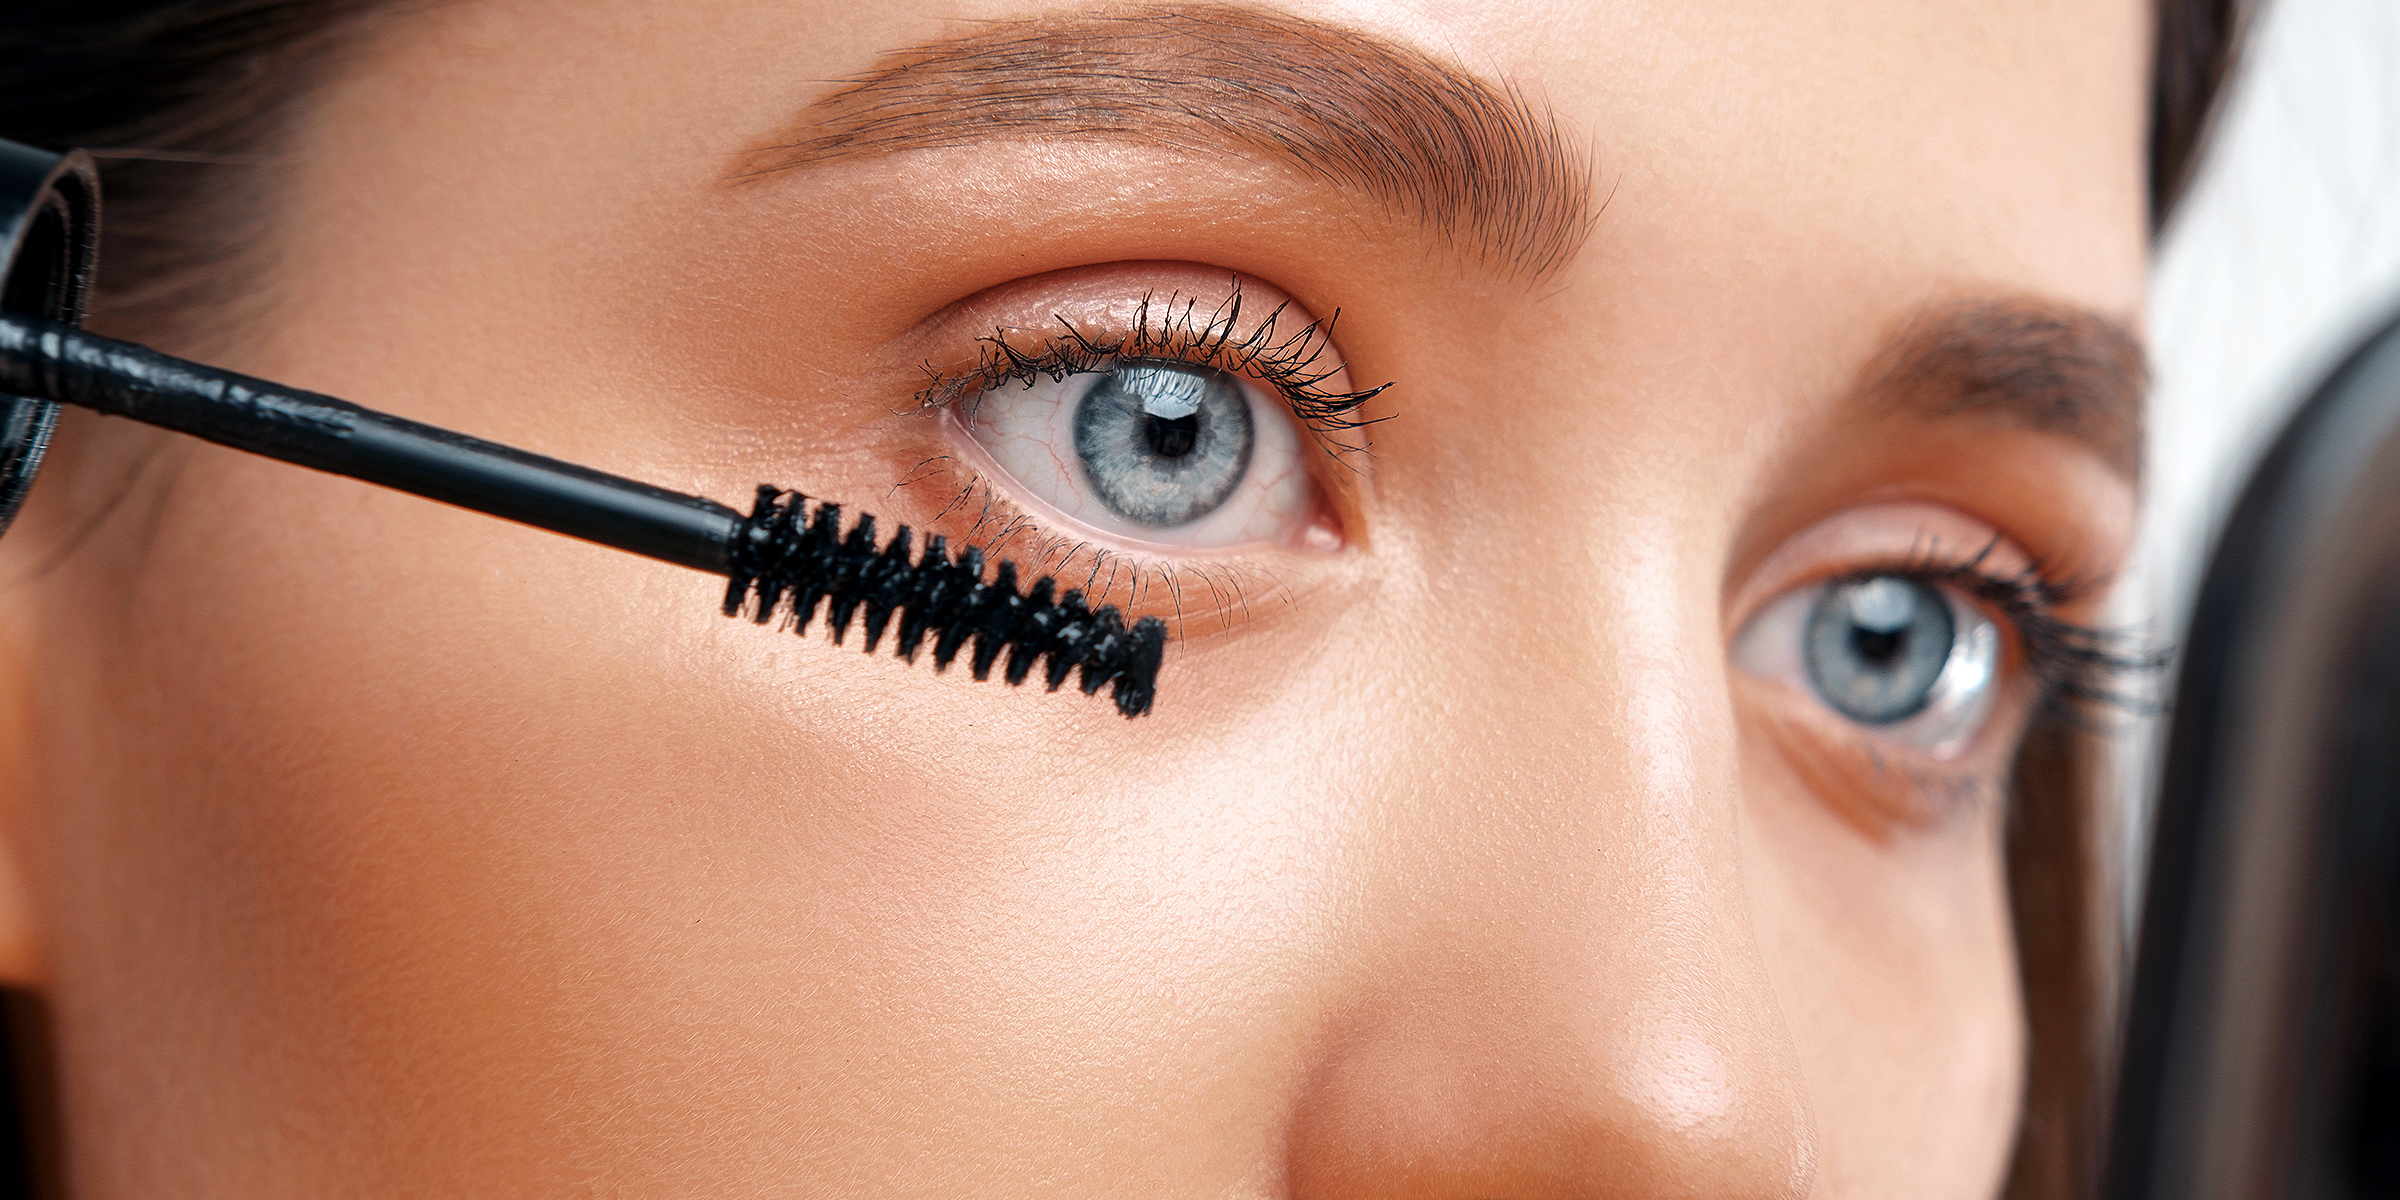 A woman applying a mascara | Source: Shutterstock